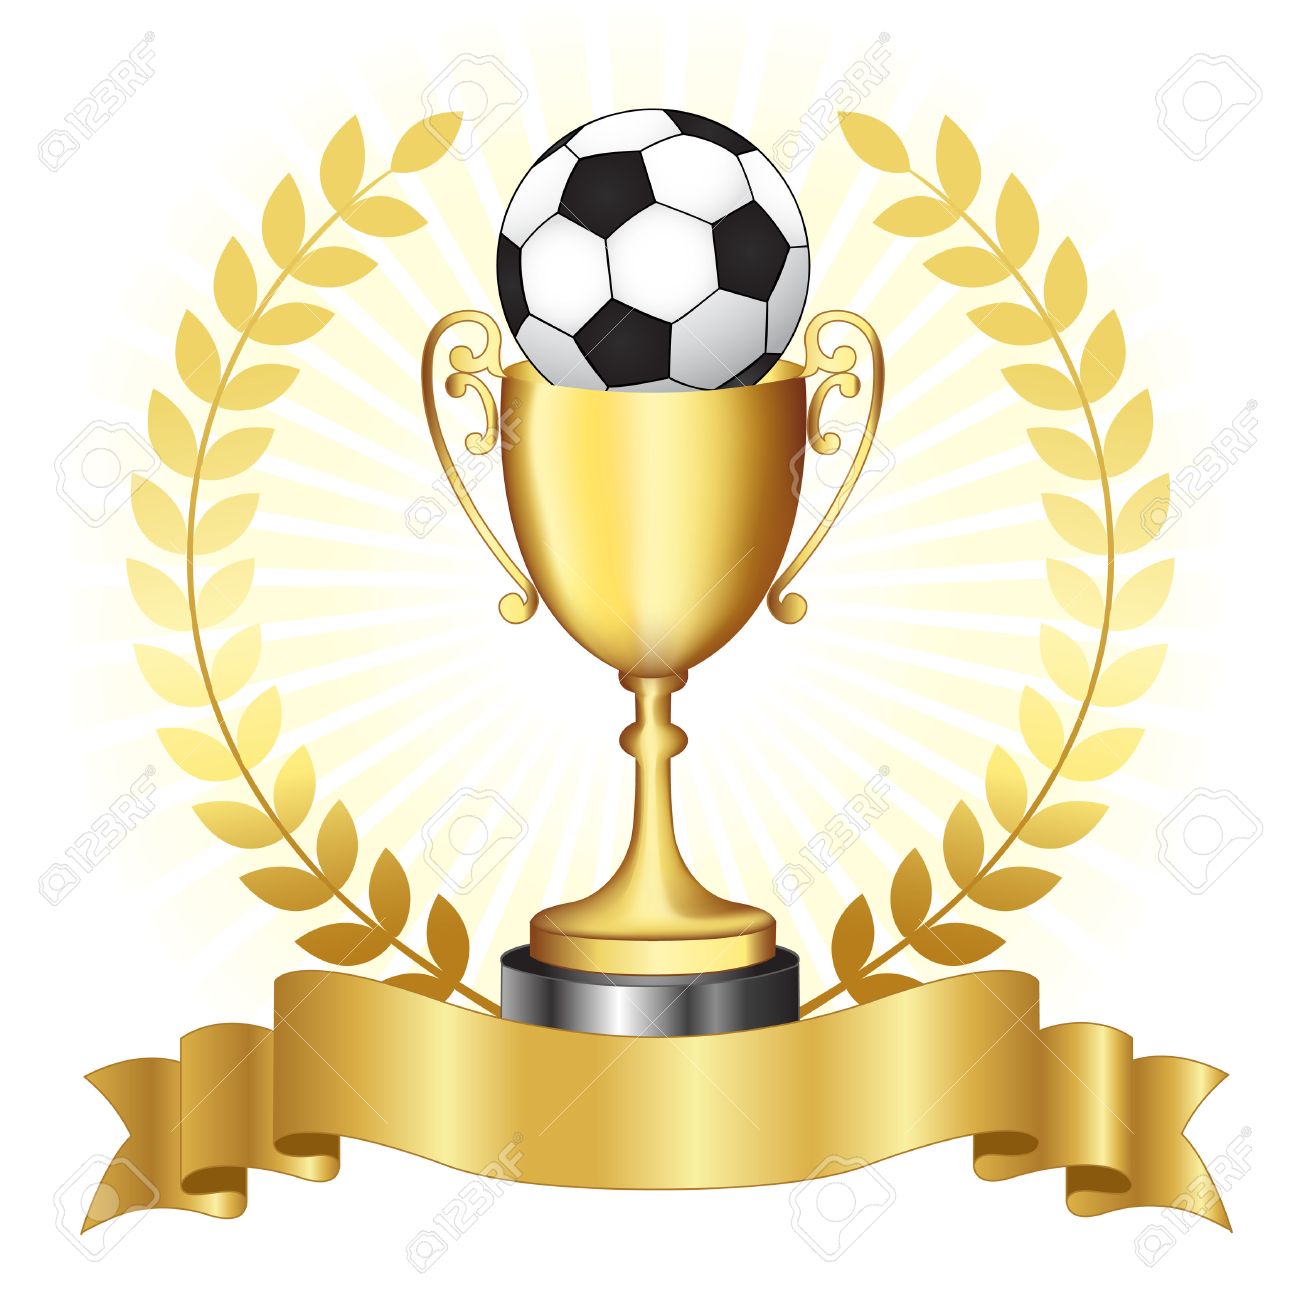 Soccer campionship gold trophy with golden banner and laurel...